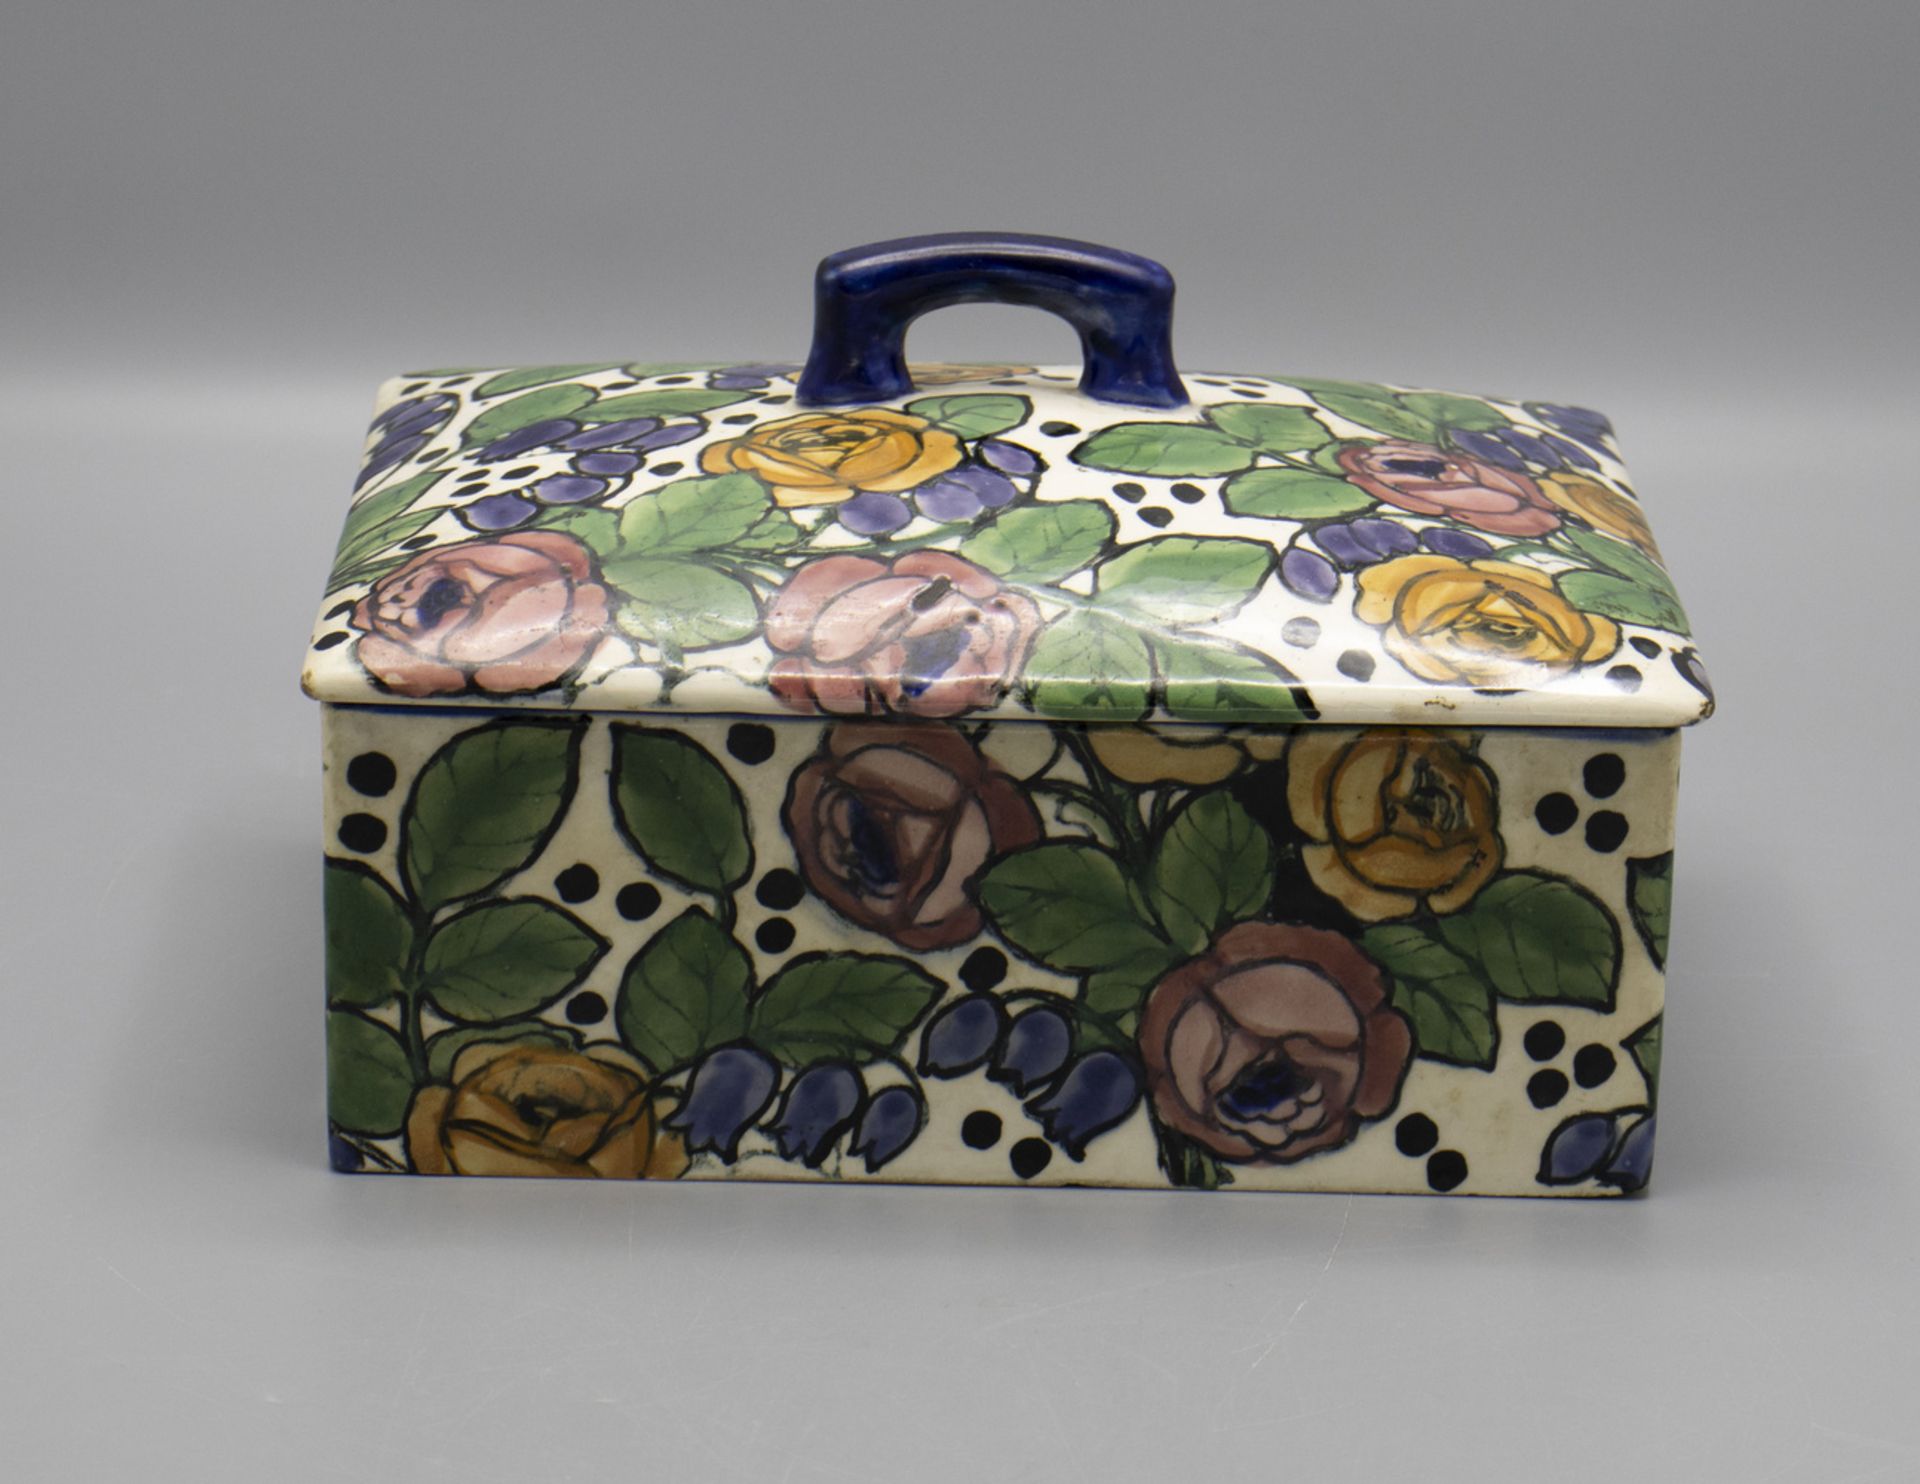 Keramik Deckeldose / A ceramic lidded box, um 1900